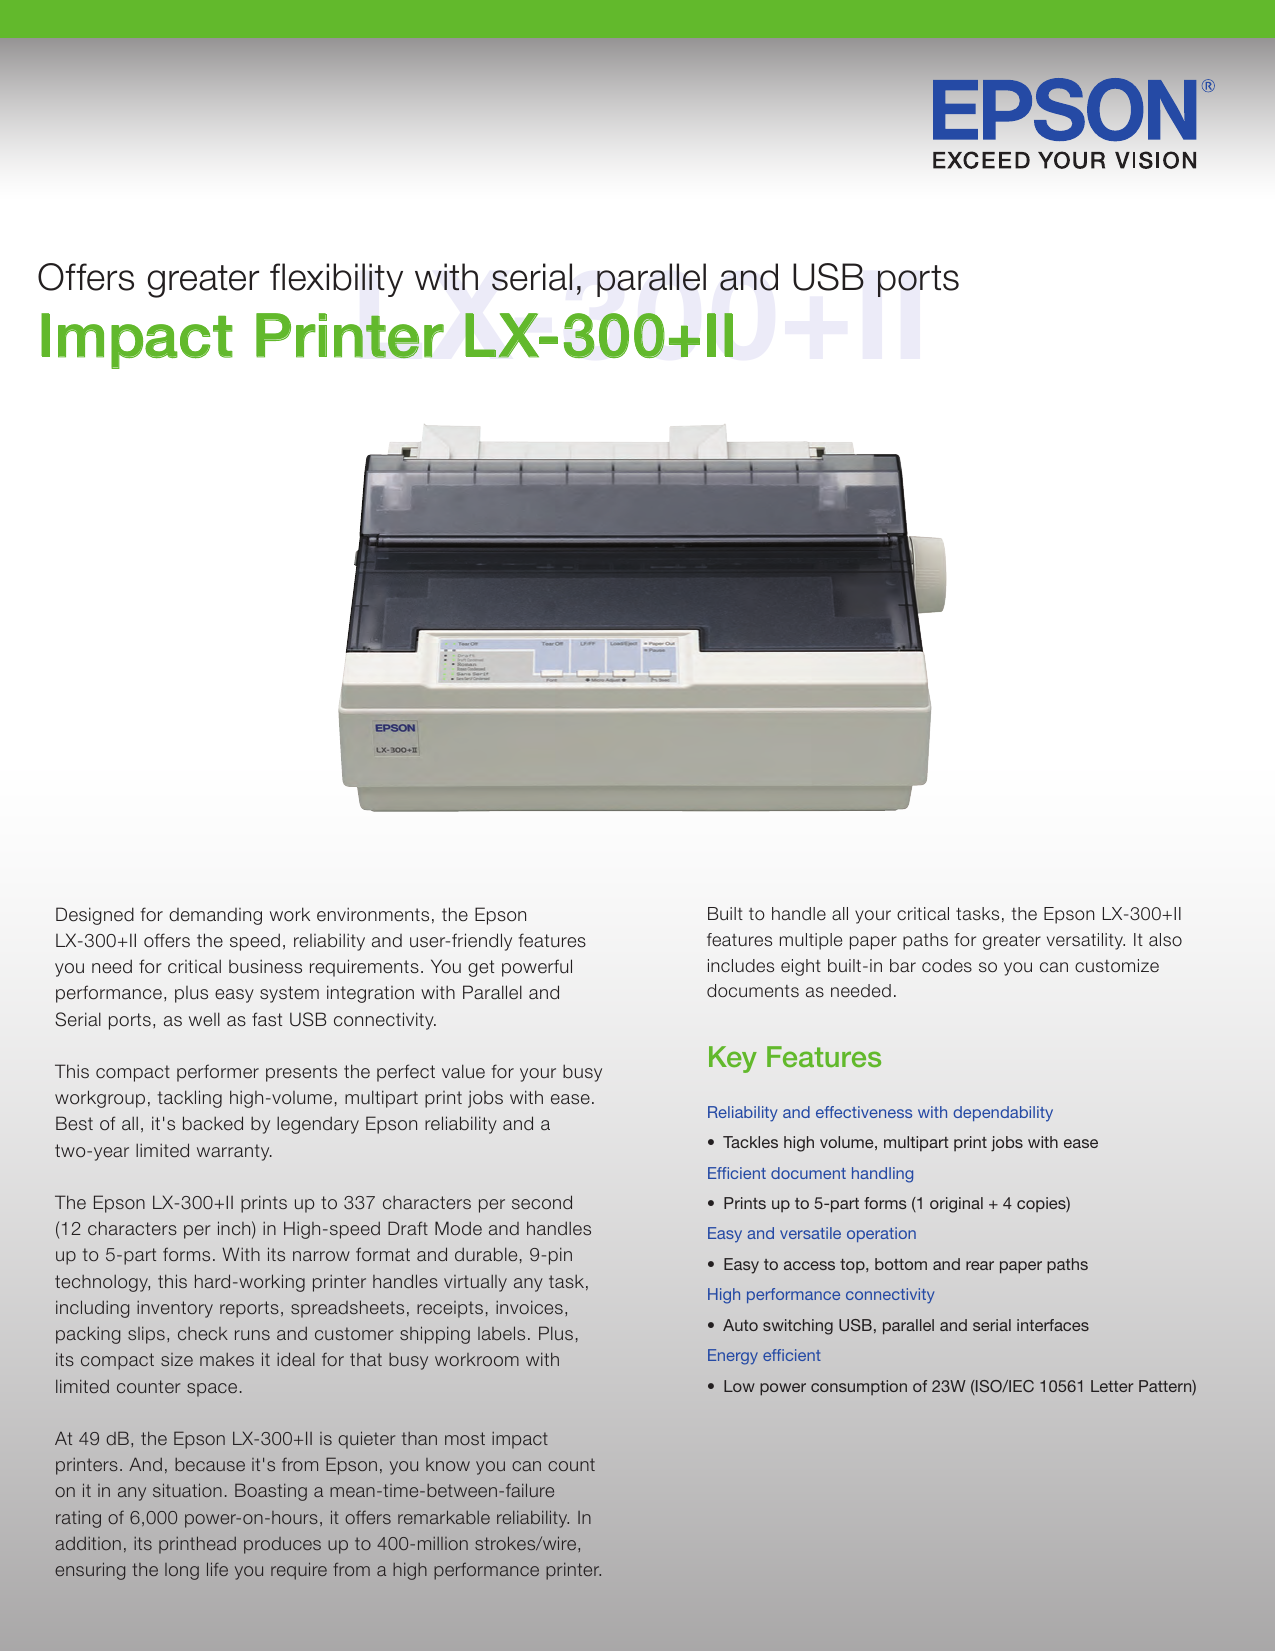 epson lx 300 dot matrix printer price